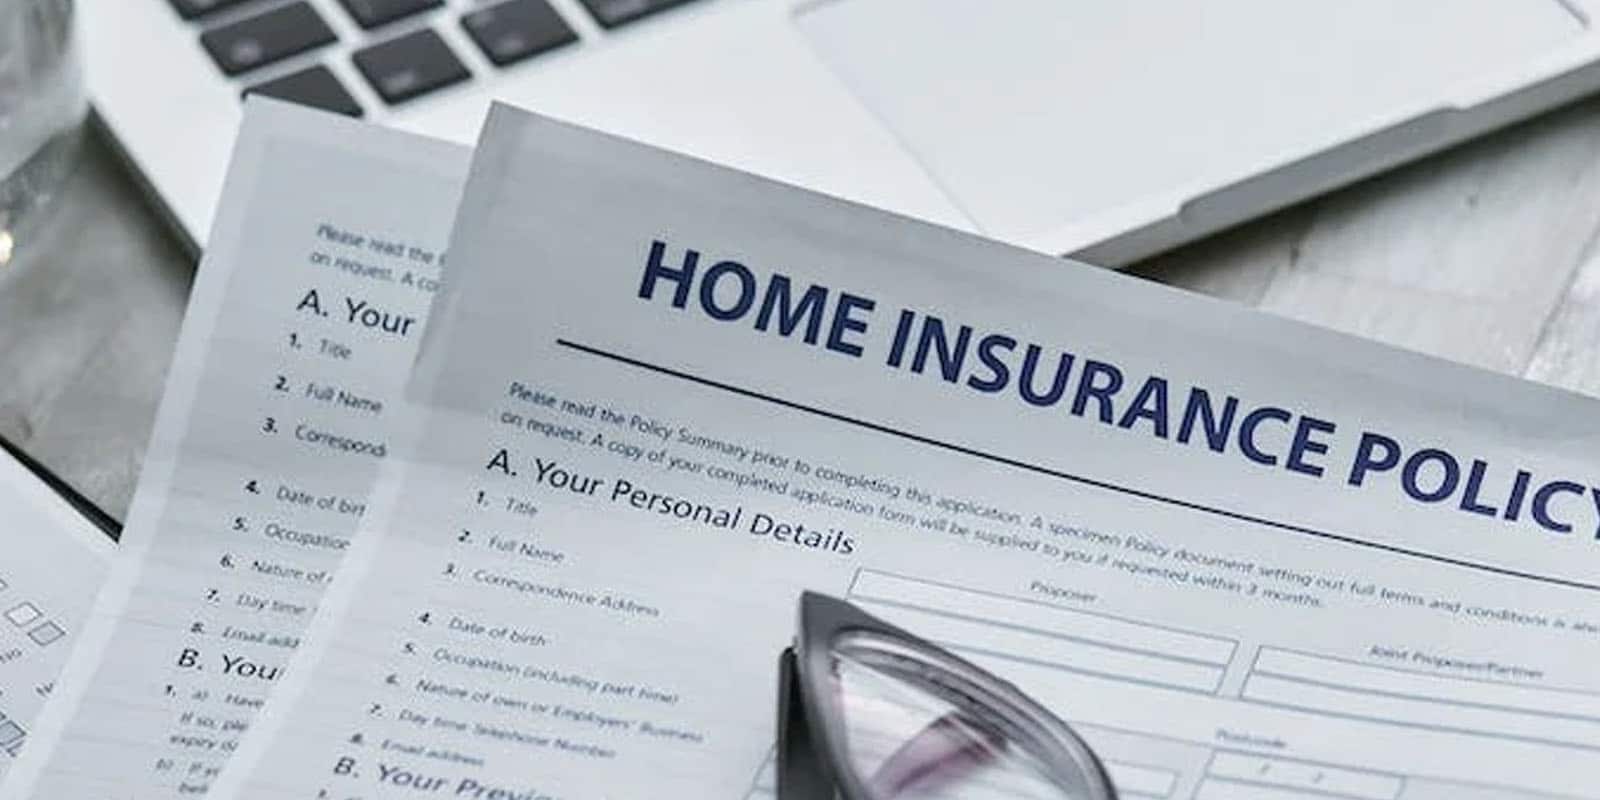 Home insurance application